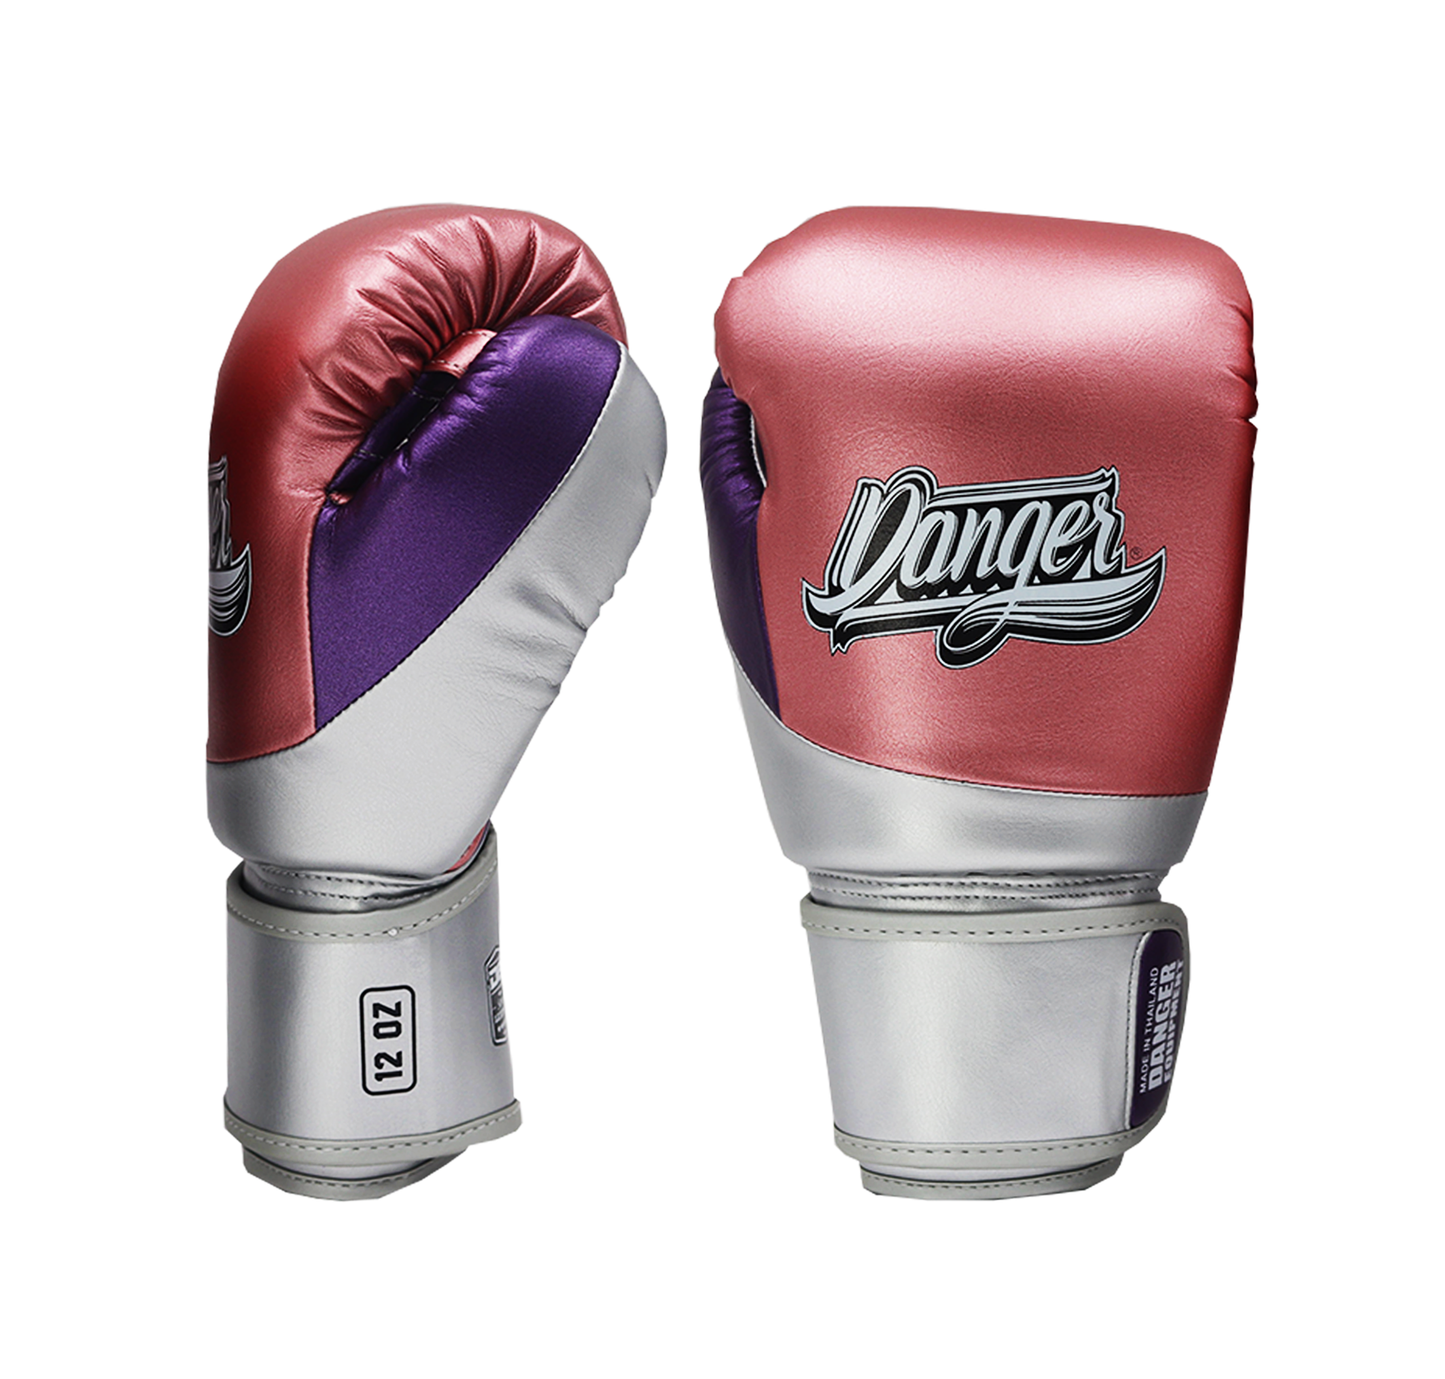 DANGER Boxing Gloves Evo 3.0 Pink/Silver/Purple